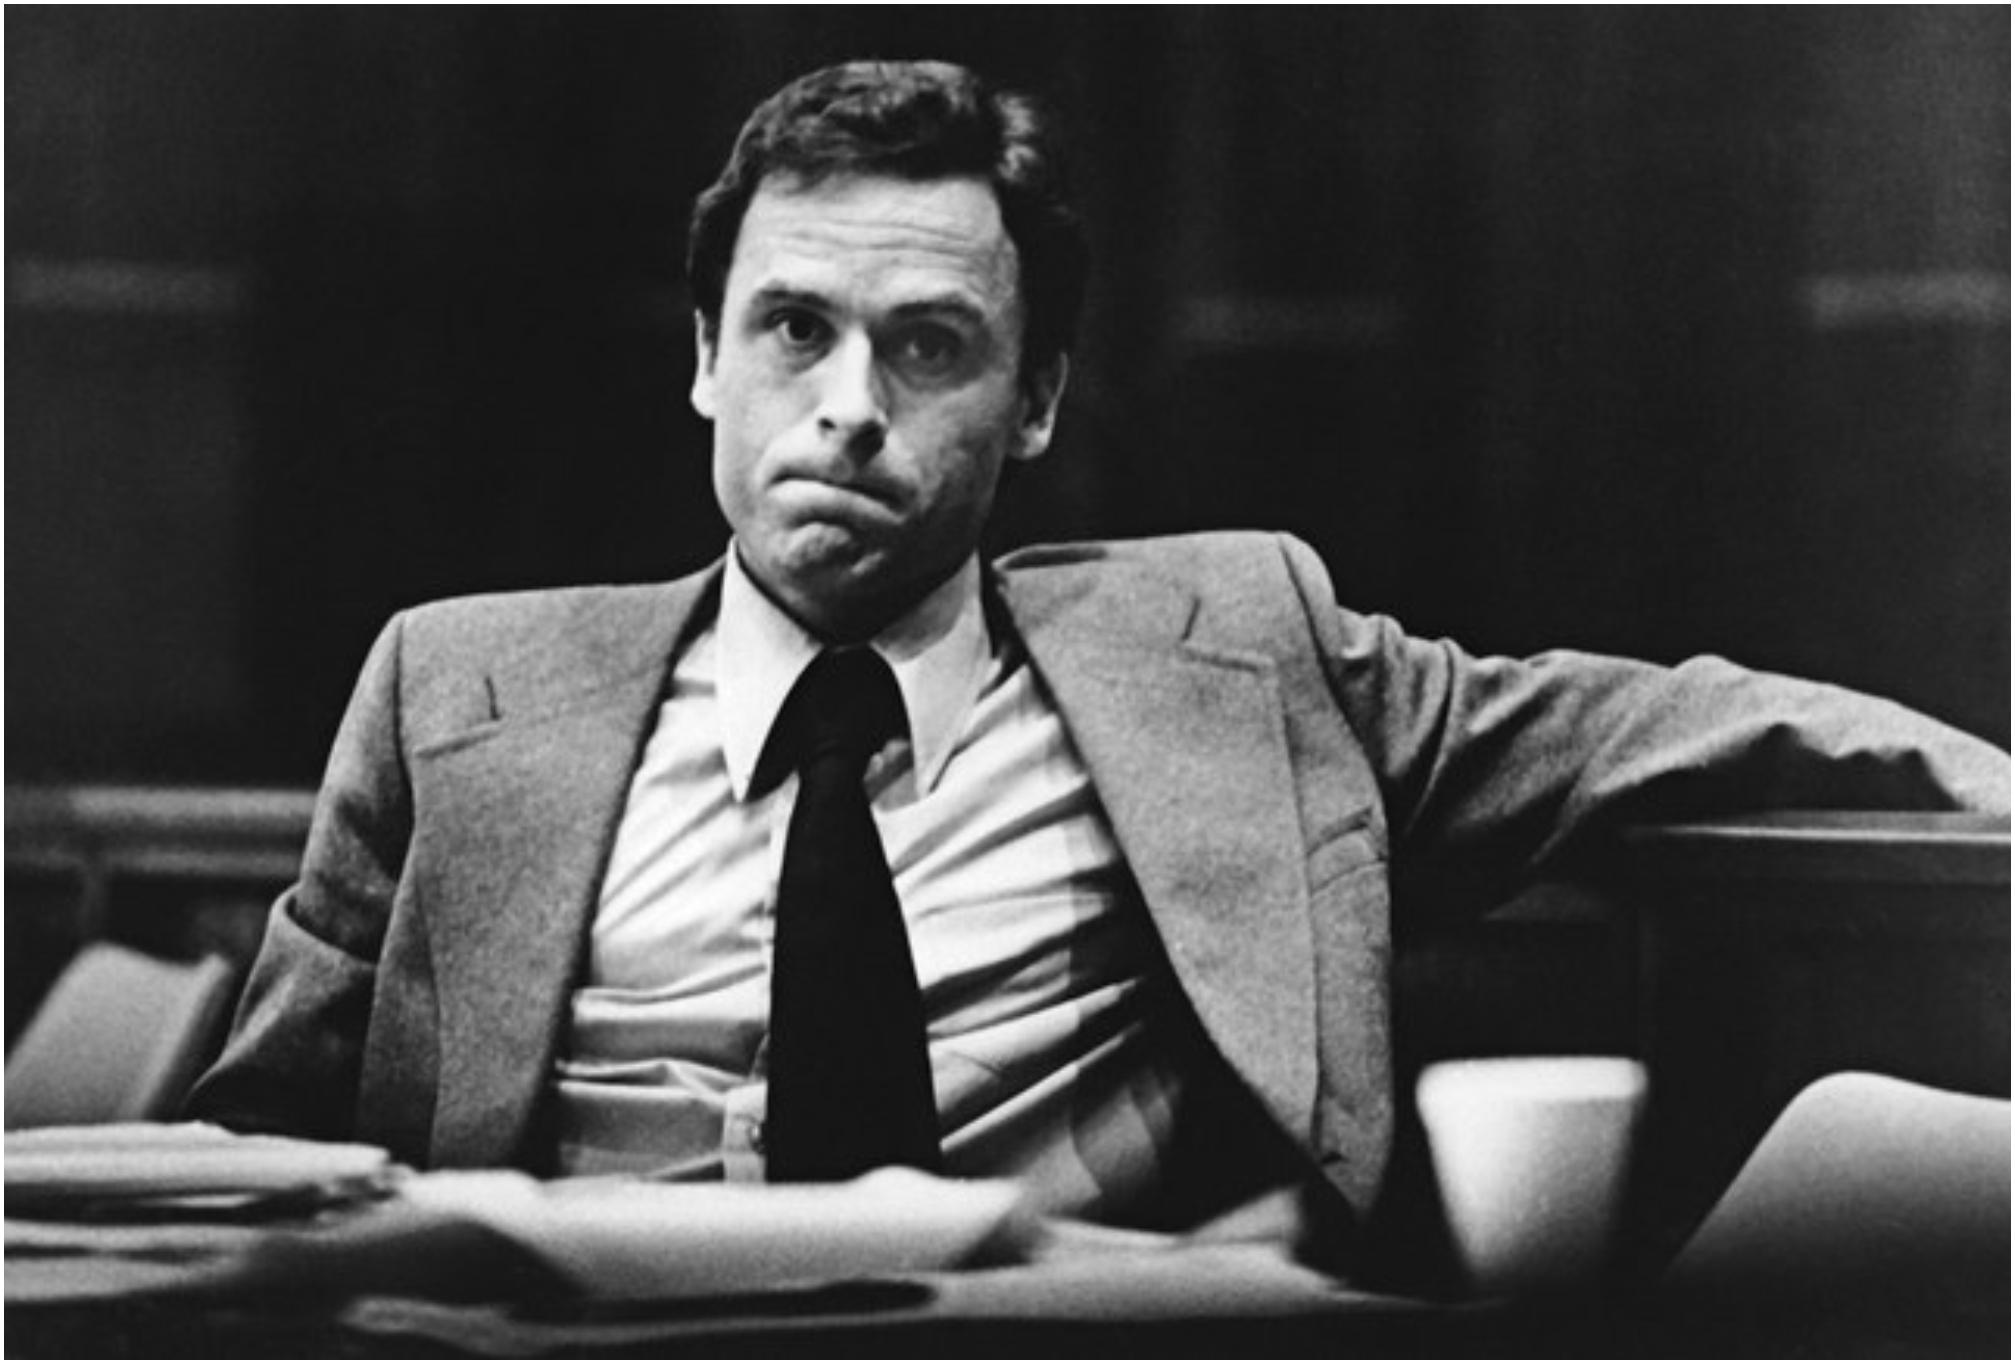 Ted Bundy: O γοητευτικός serial killer που ερωτεύονταν οι γυναίκες – Η ιστορία ενός ευφυούς ανθρώπου που σκότωσε δεκάδες κοπέλες πριν εκτελεστεί και κράτησαν τον εγκέφαλο του για πειράματα